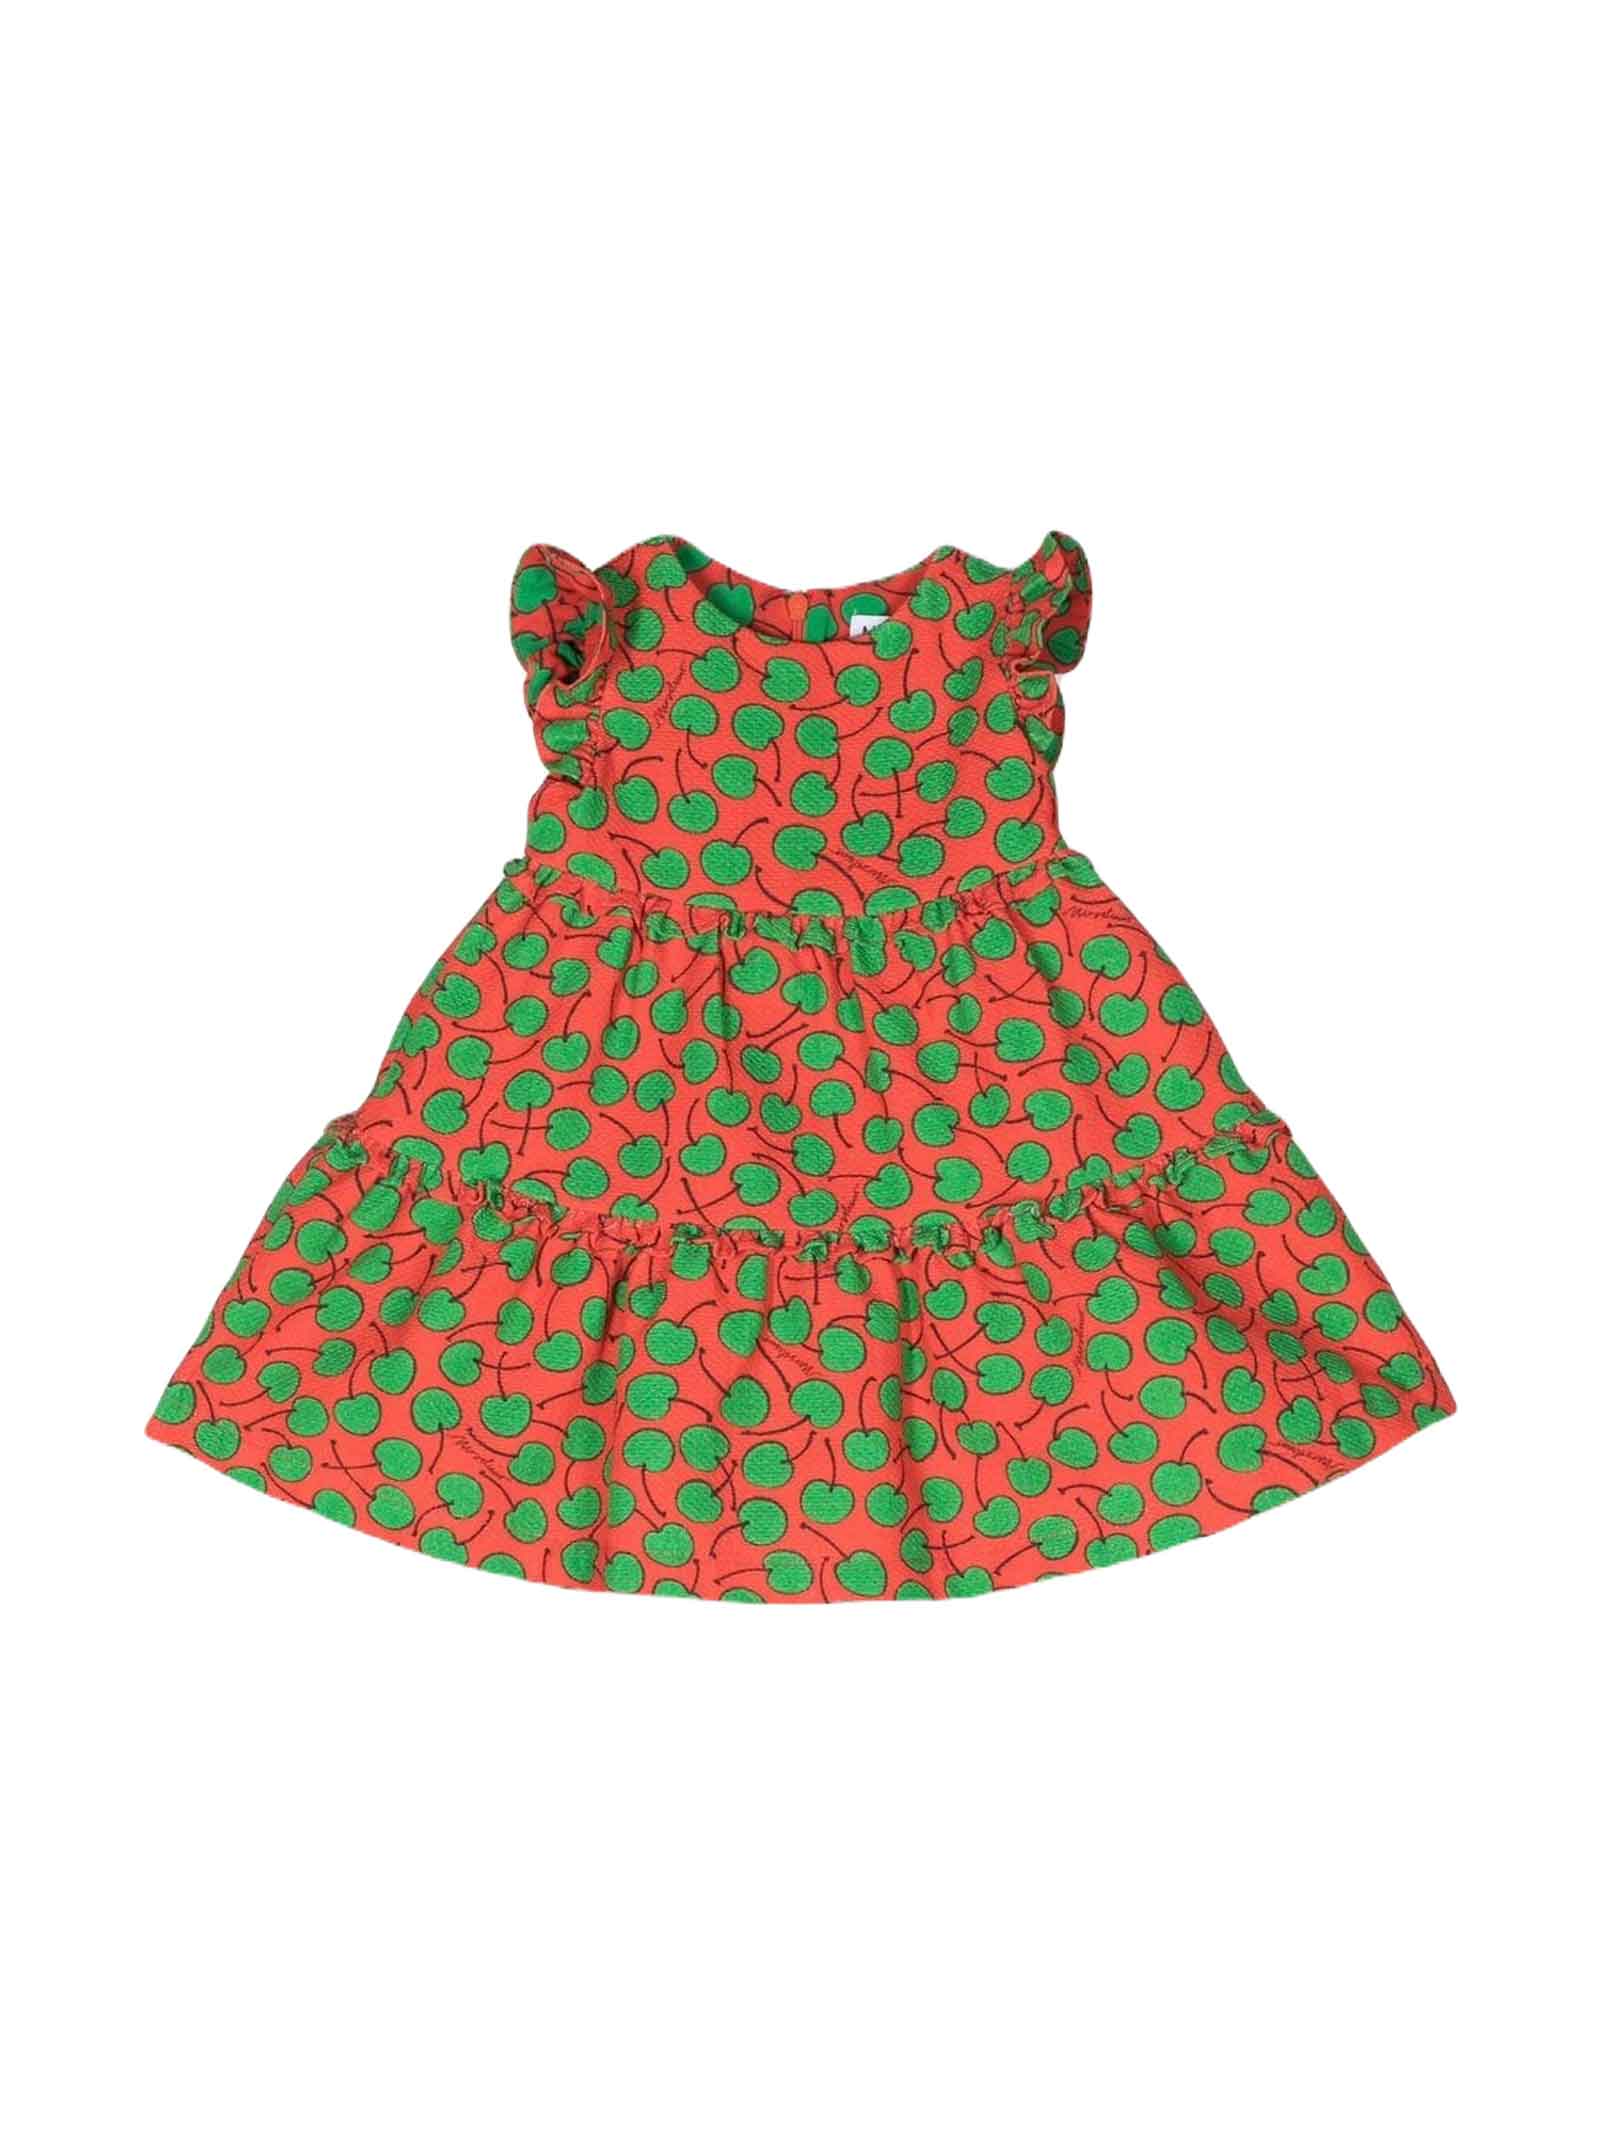 Moschino Red/green Dress Baby Girl